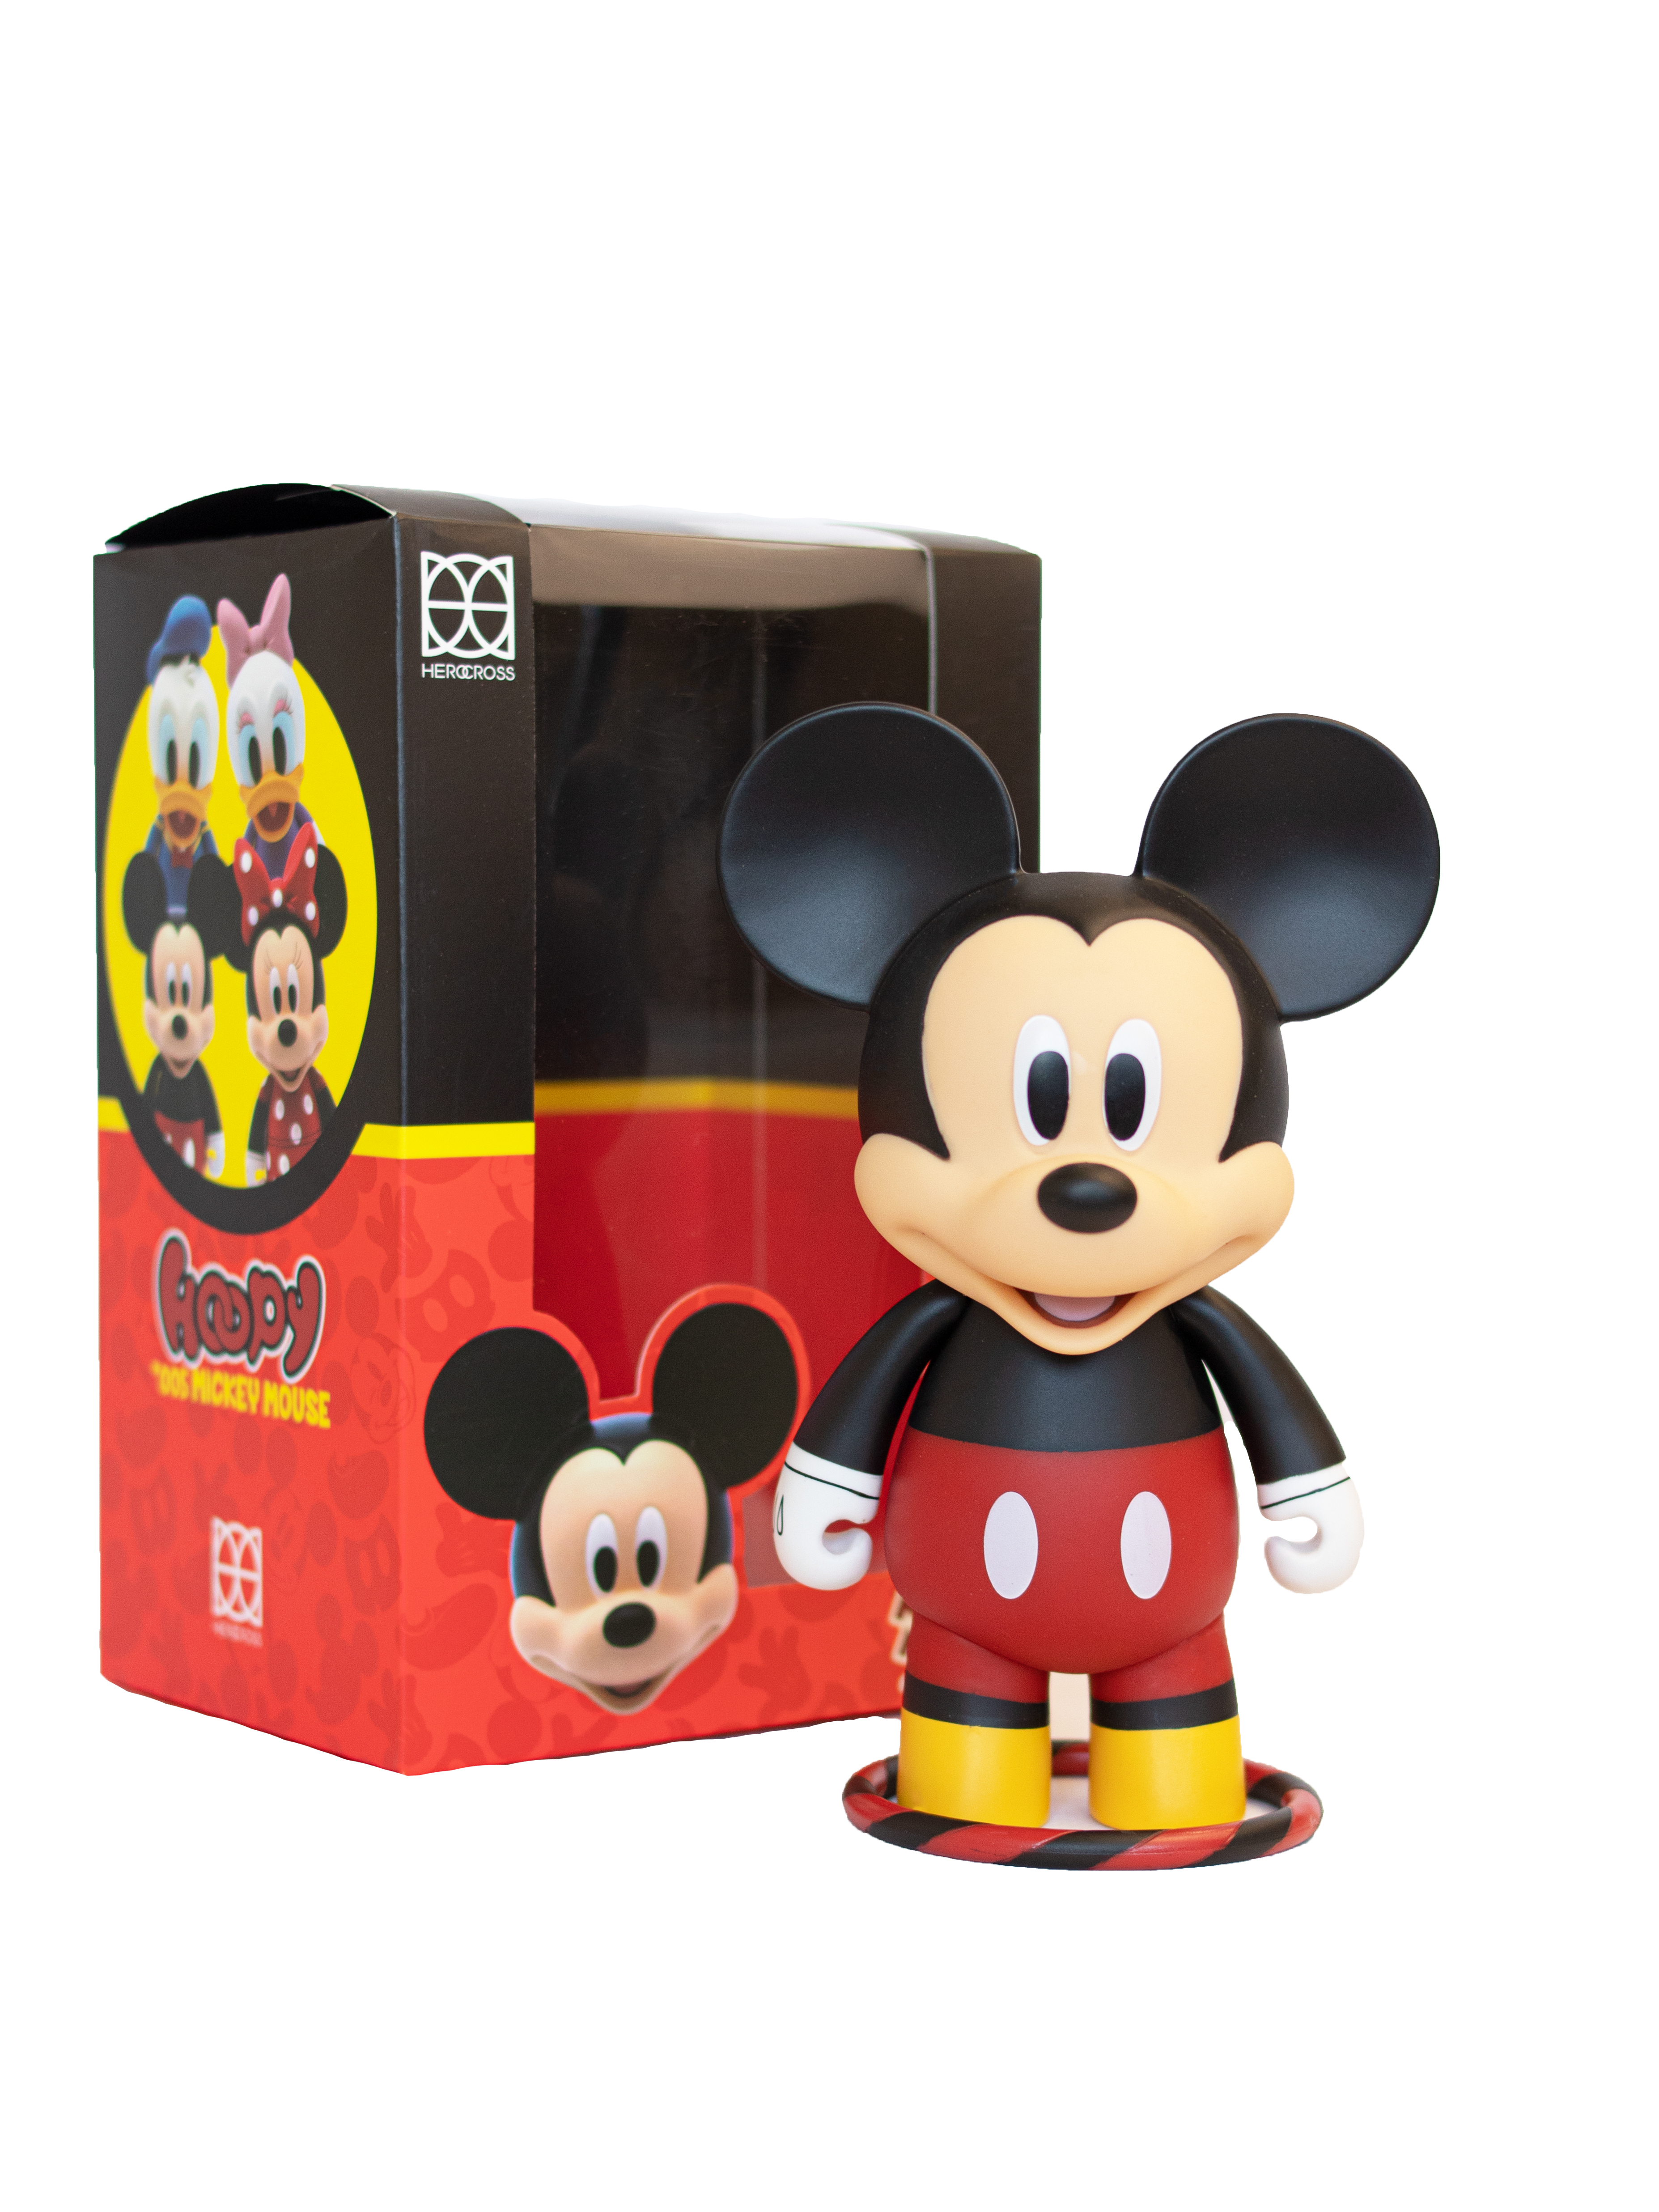 Фигурка Disney Micky Mouse 15 см 1 шт Микки Маус HEROCROSS серия Друзья Микки фигурка herocross микки маус специальная версия mickey mouse